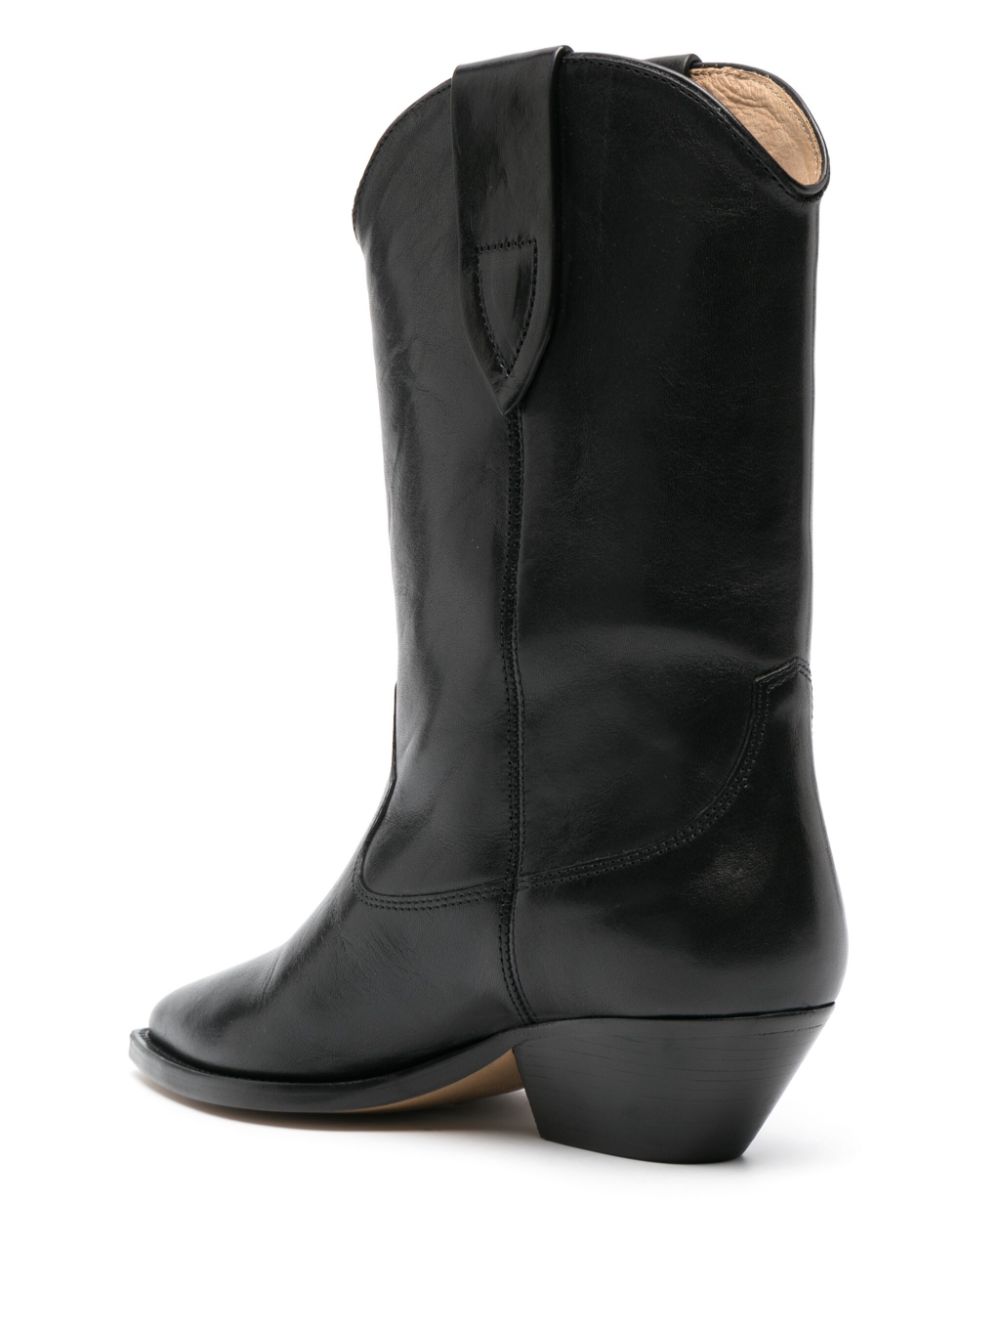 ISABEL MARANT Sleek Leather Block-Heel Boots for Women